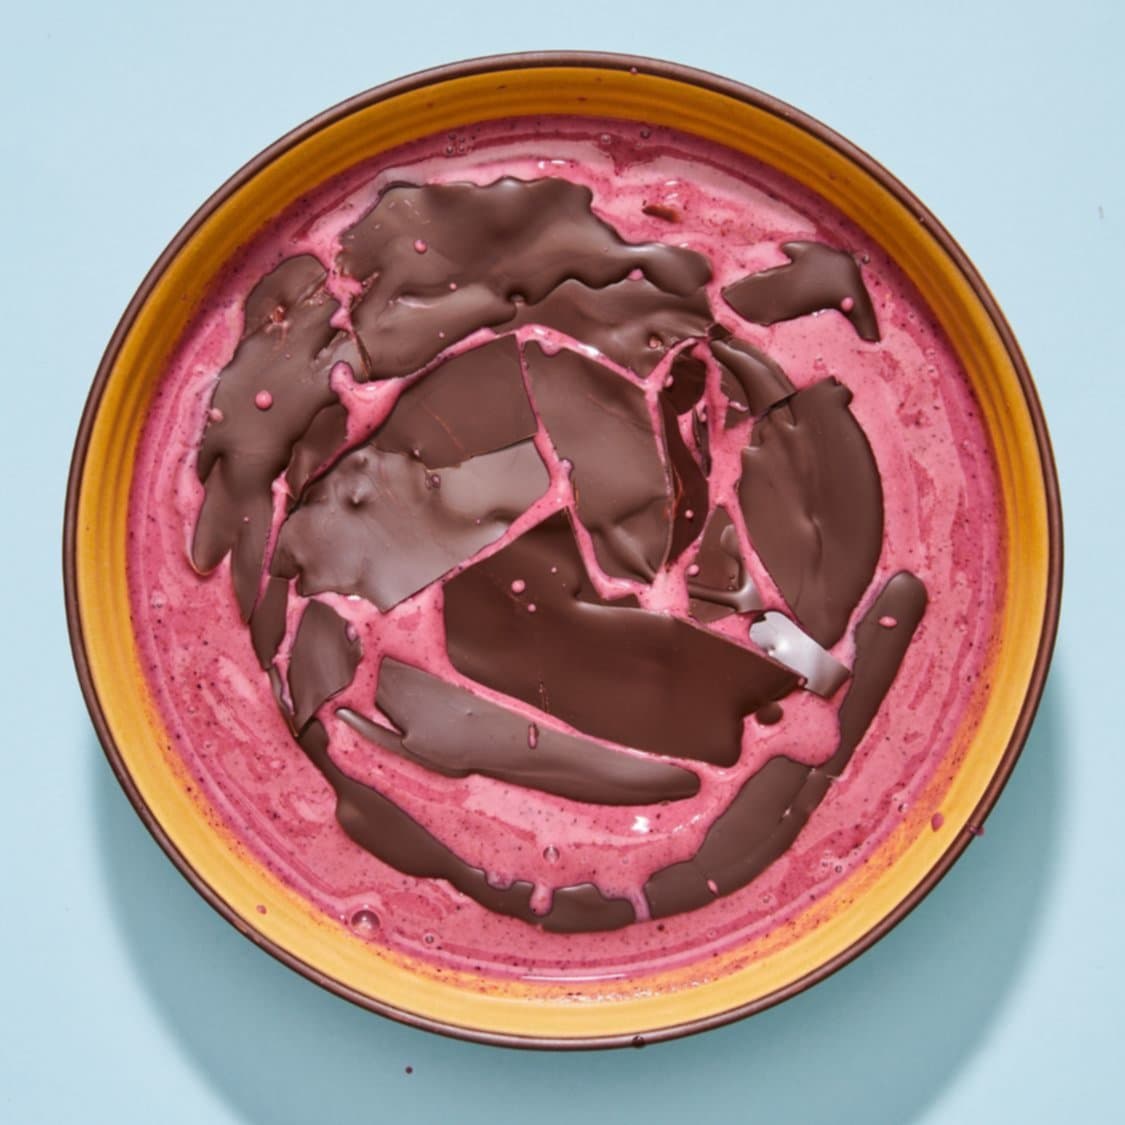 https://fleishigs.com/images/mobile-app/recipes/2081-list-acai-or-pitaya-bowl-with-chocolate-shell.jpg